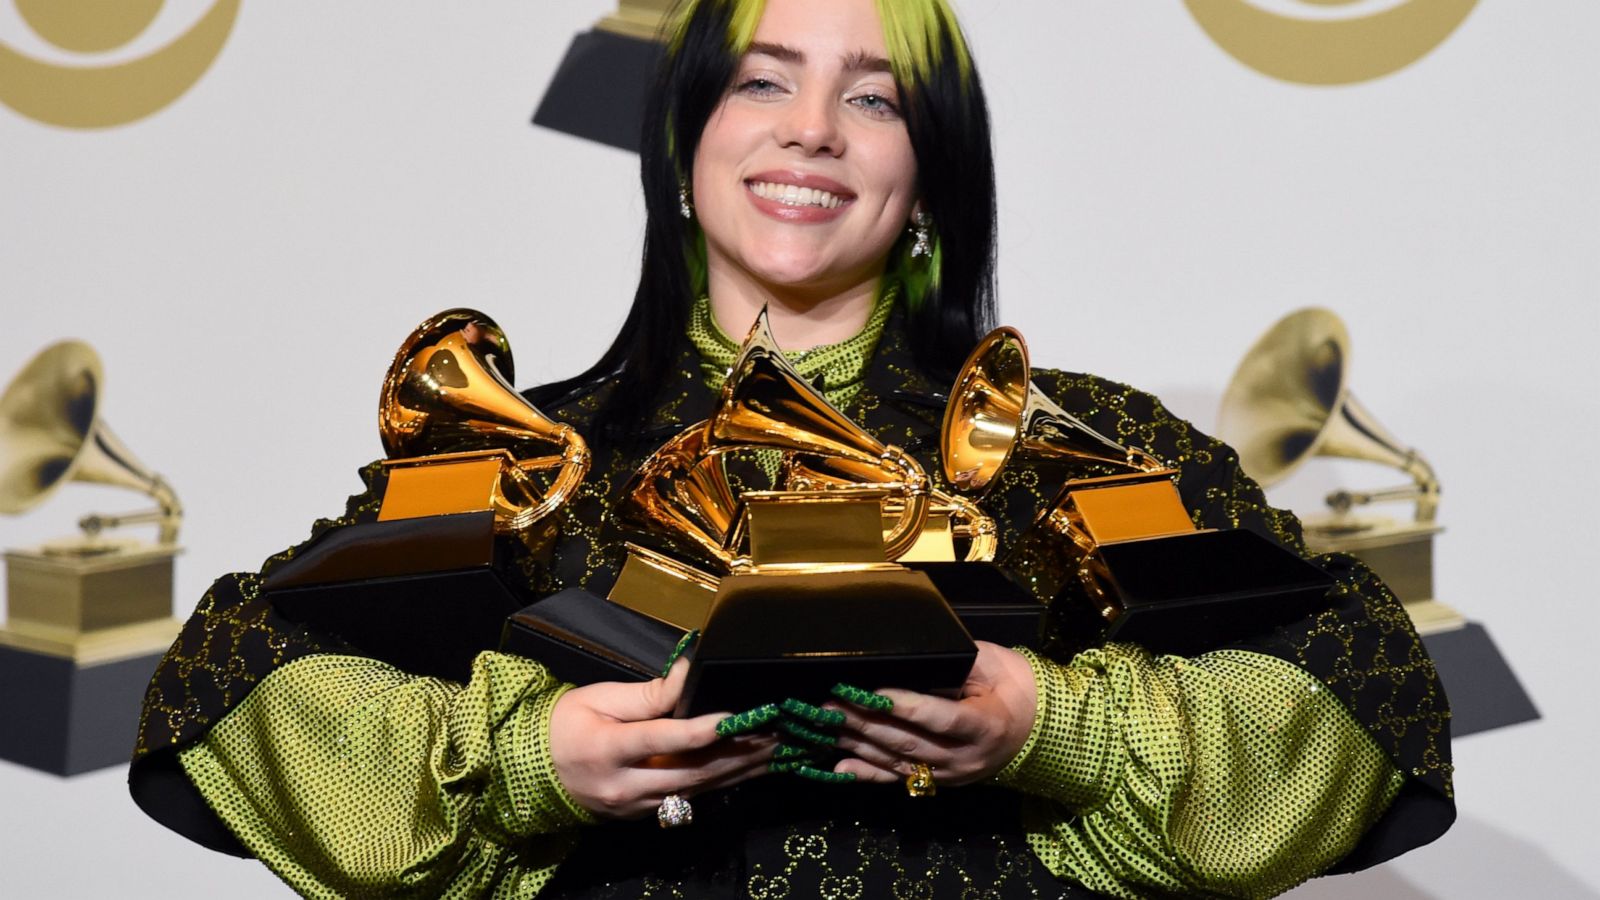 Billie Eilish A Voice Of The Youth Tops The Grammy Awards Abc News